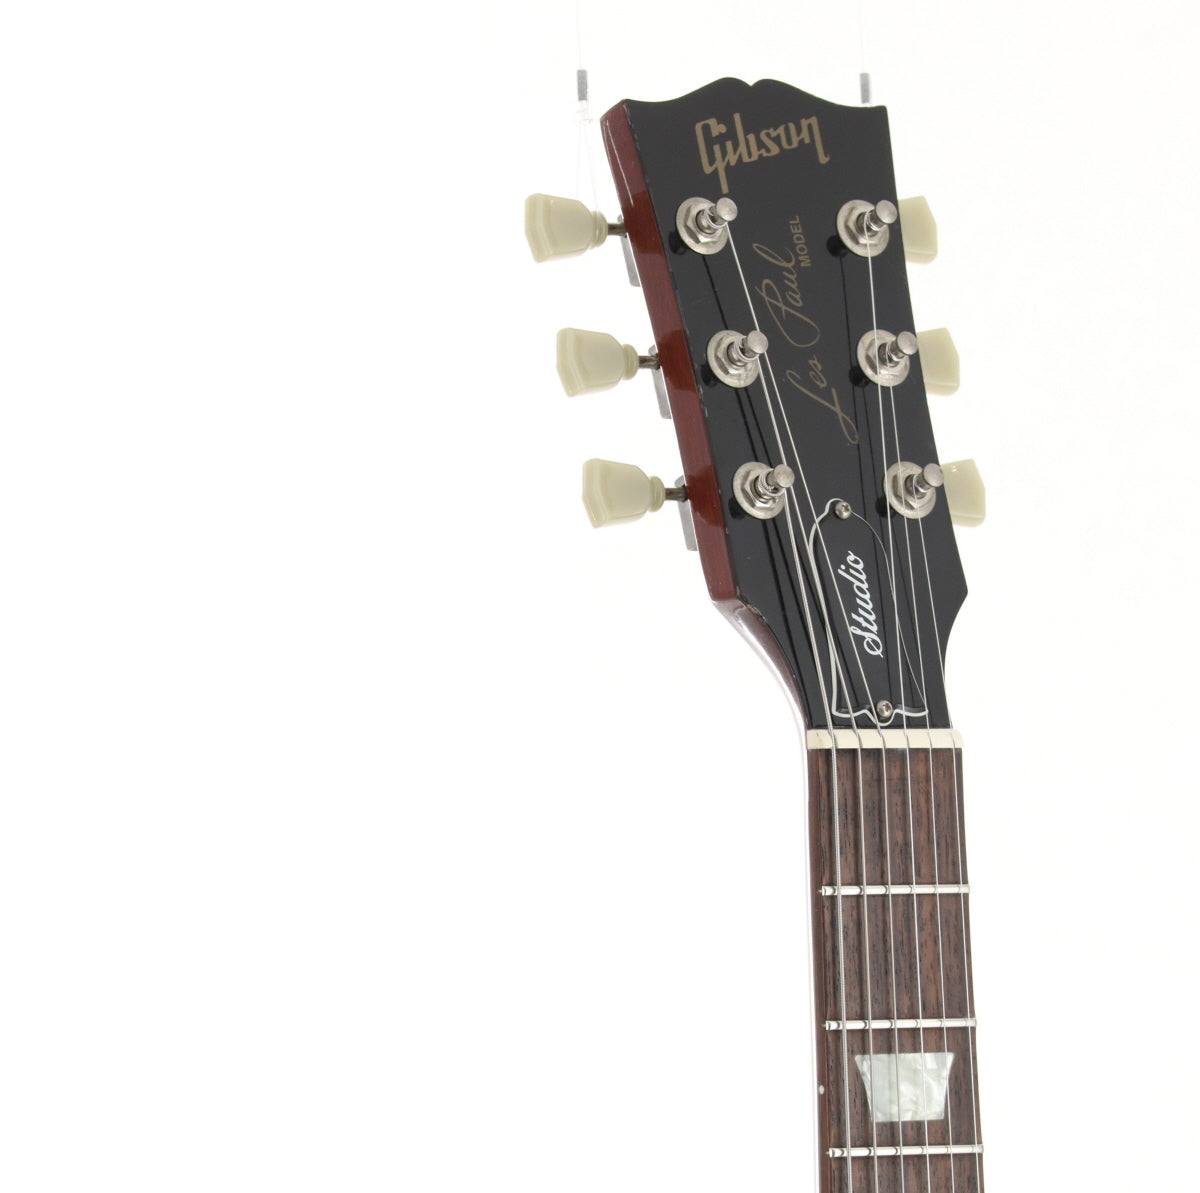 [SN 00592369] USED Gibson USA / Les Paul Studio Wine Red Chrome Hardware [06]